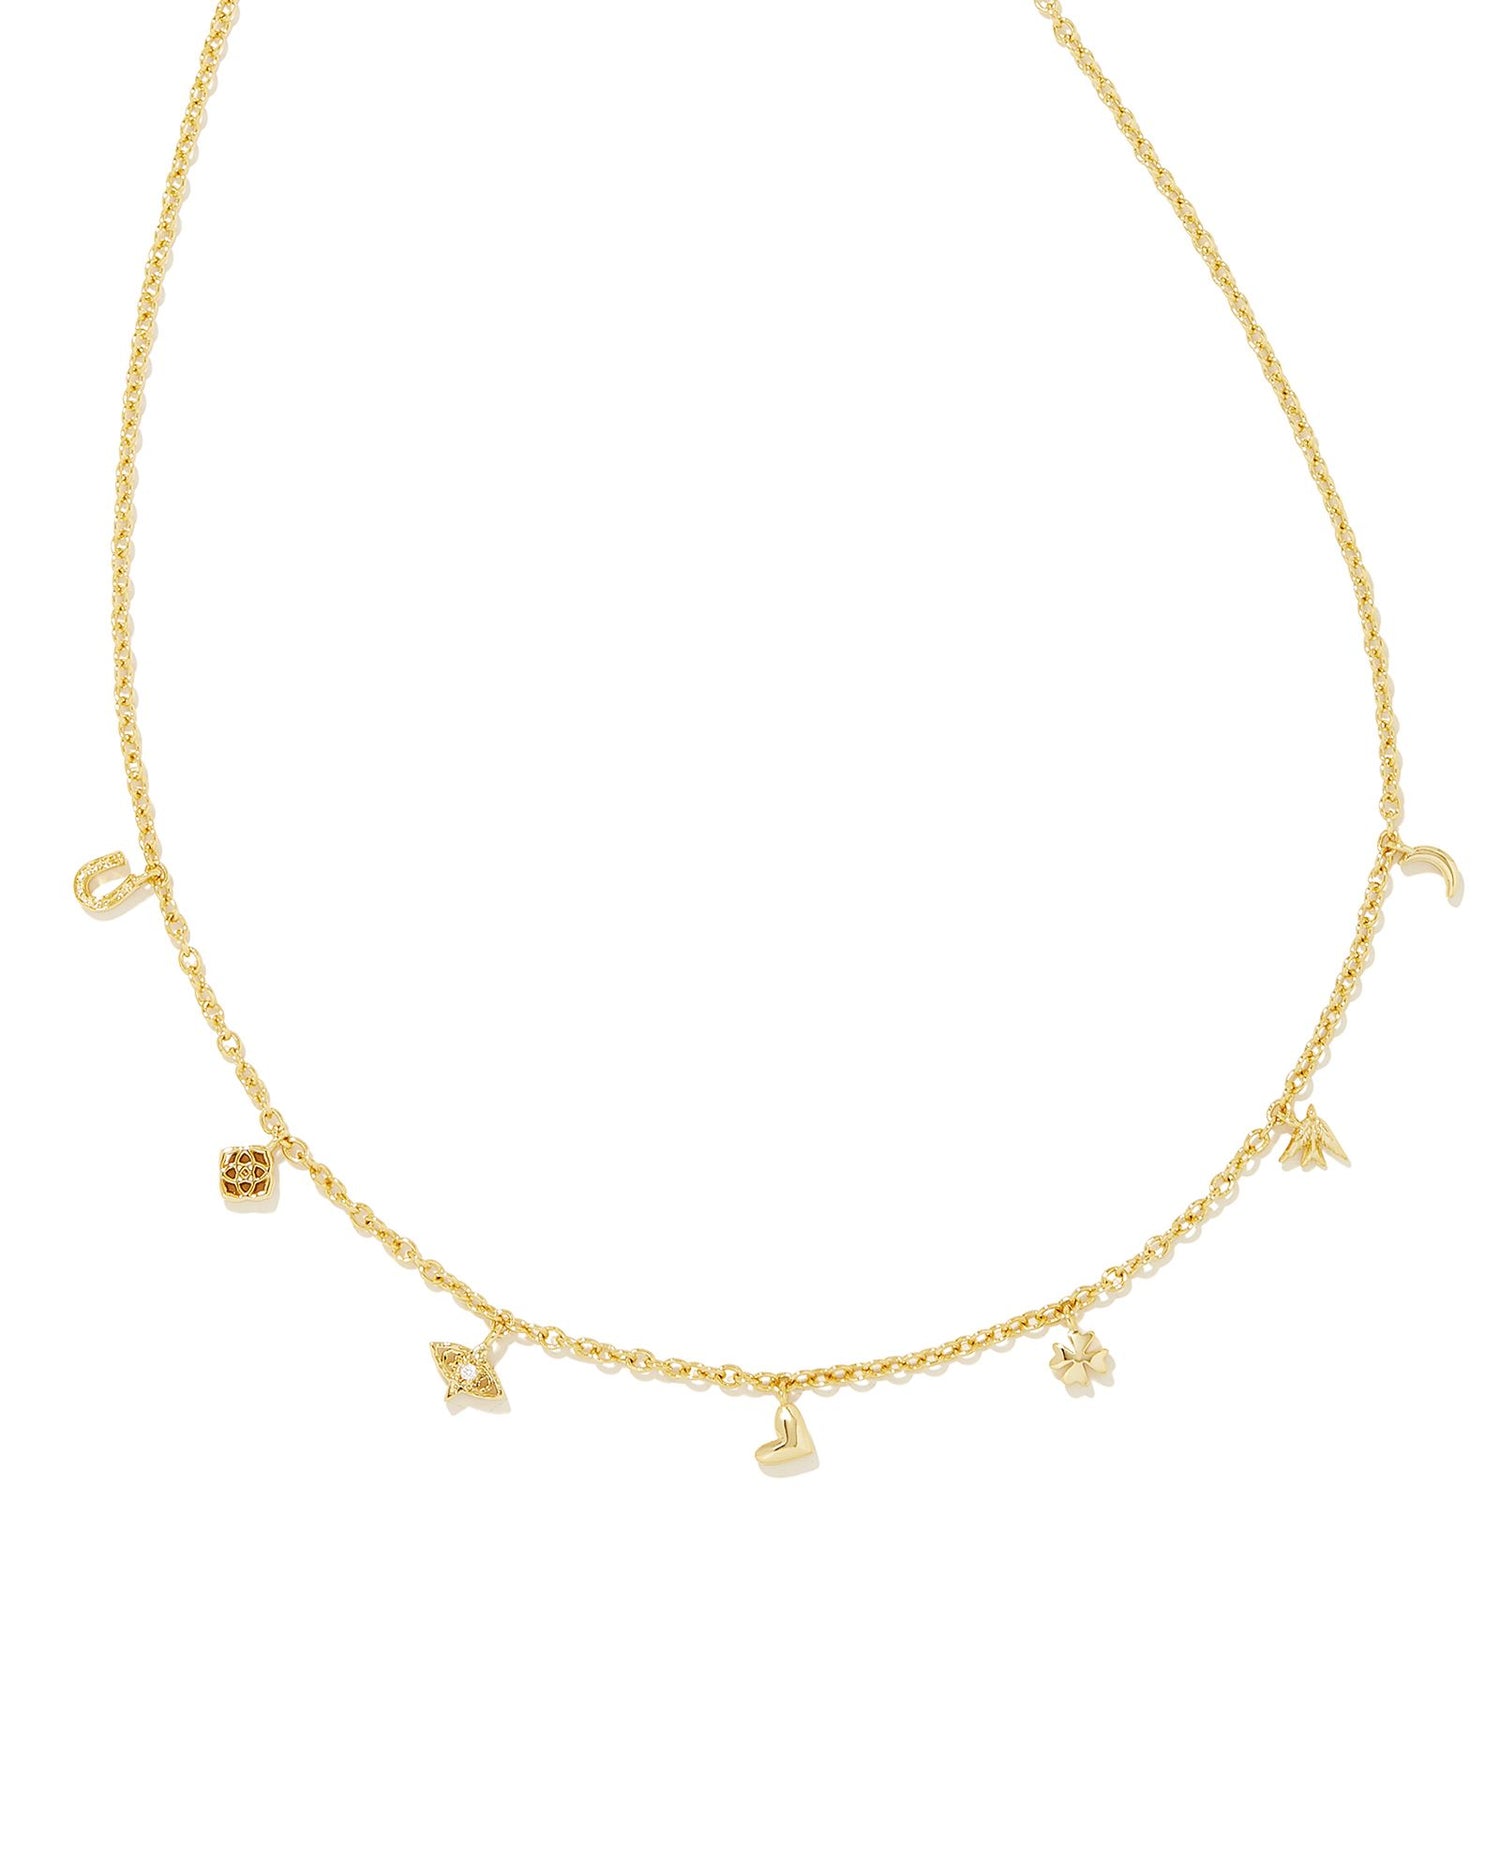 Kendra Scott Rhodium-Plated & 14k Gold-Plated Medallion-Accent Herringbone  Chain Collar Necklace, 16